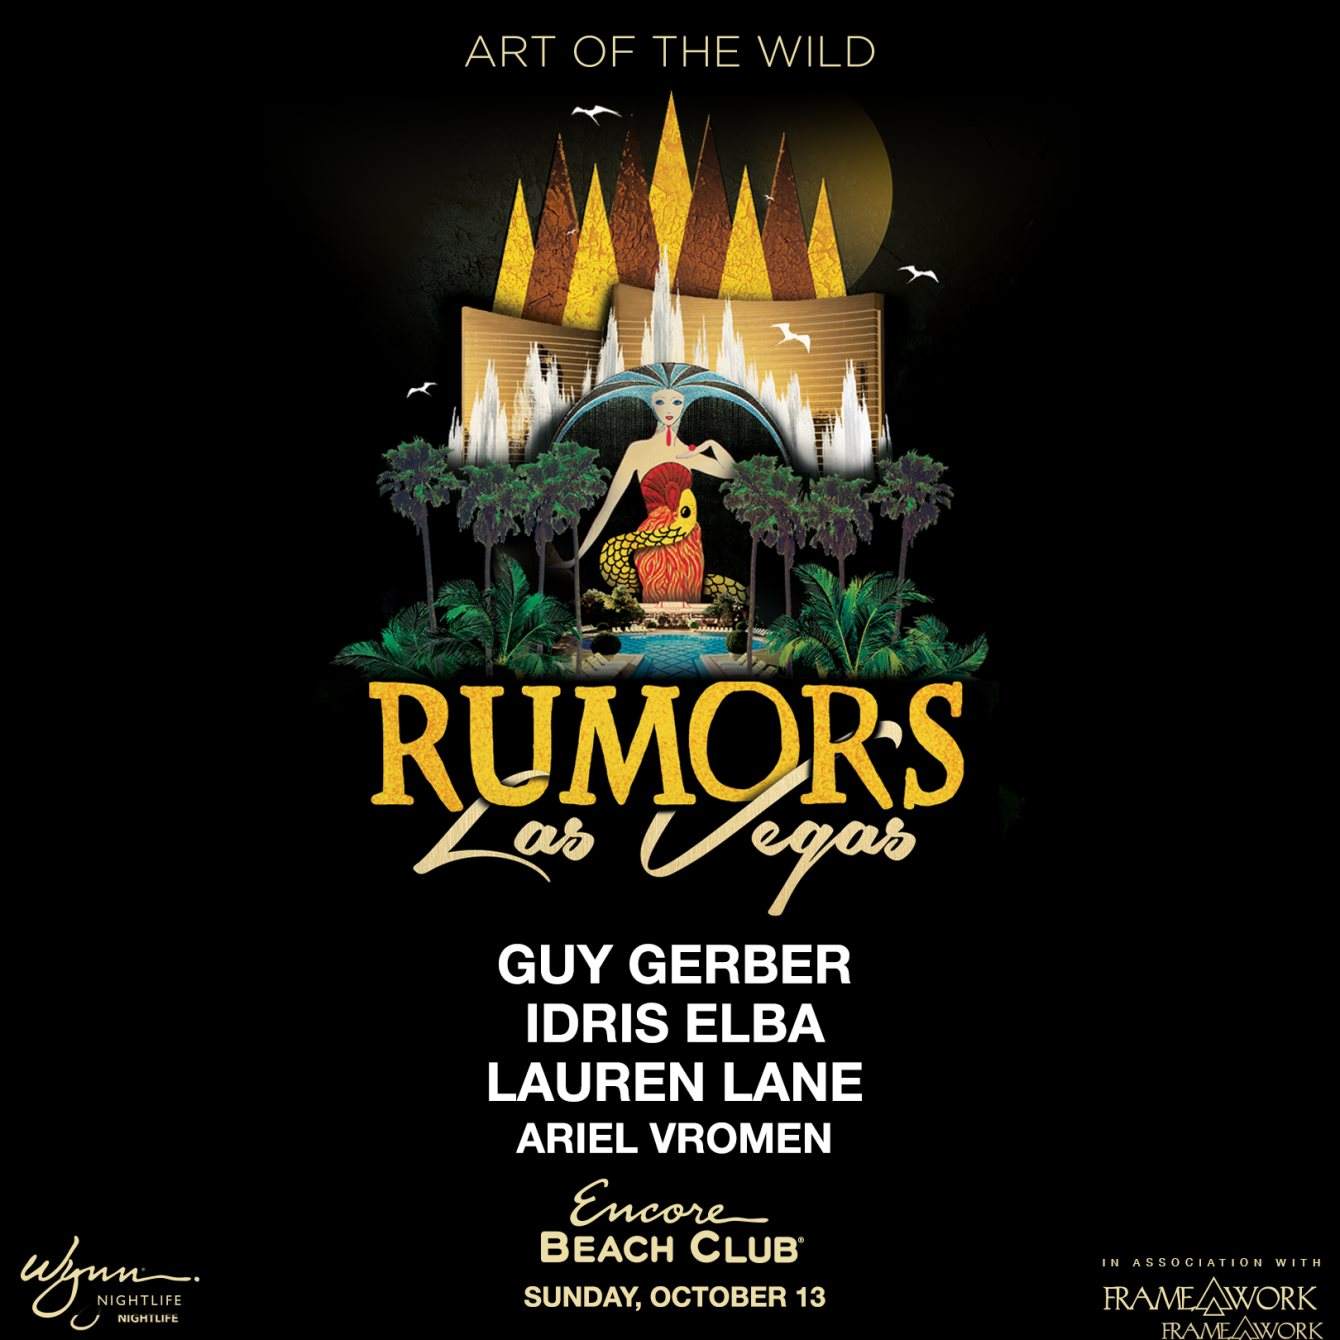 Art of the Wild - Rumors with Guy Gerber at Encore Beach Club, Las Vegas